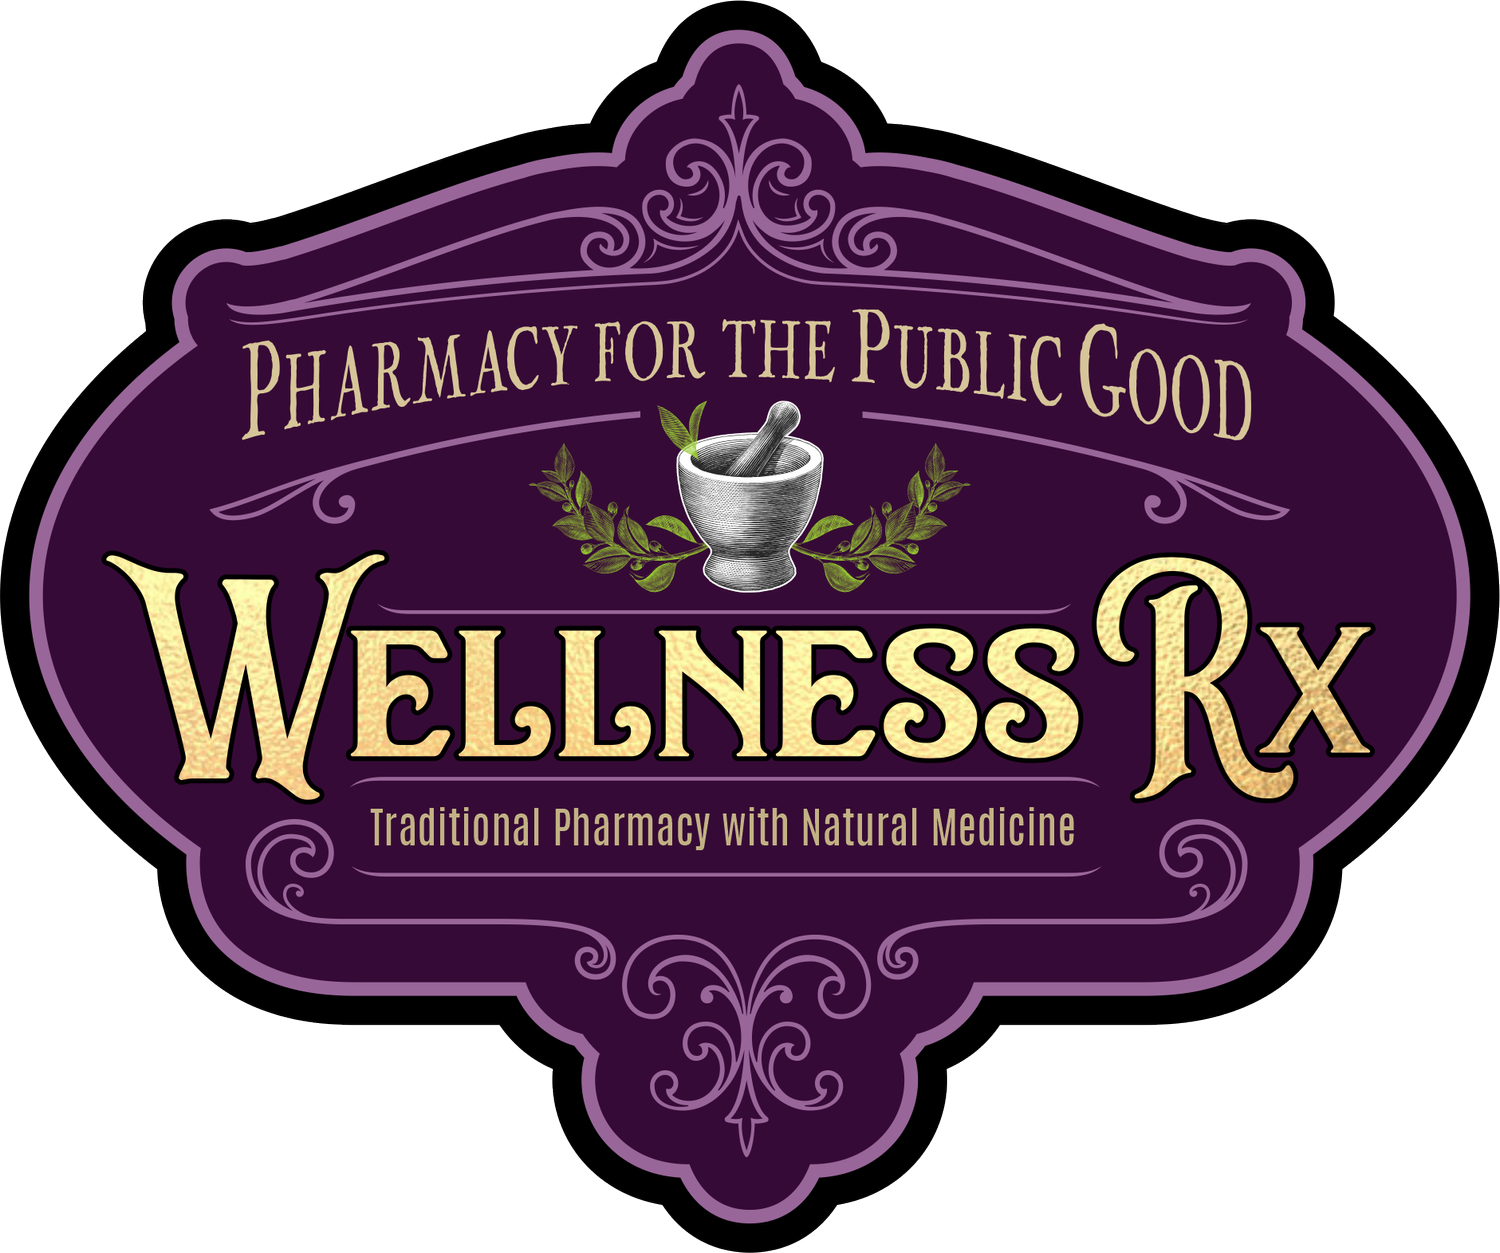 Pharmacy for the Public Good